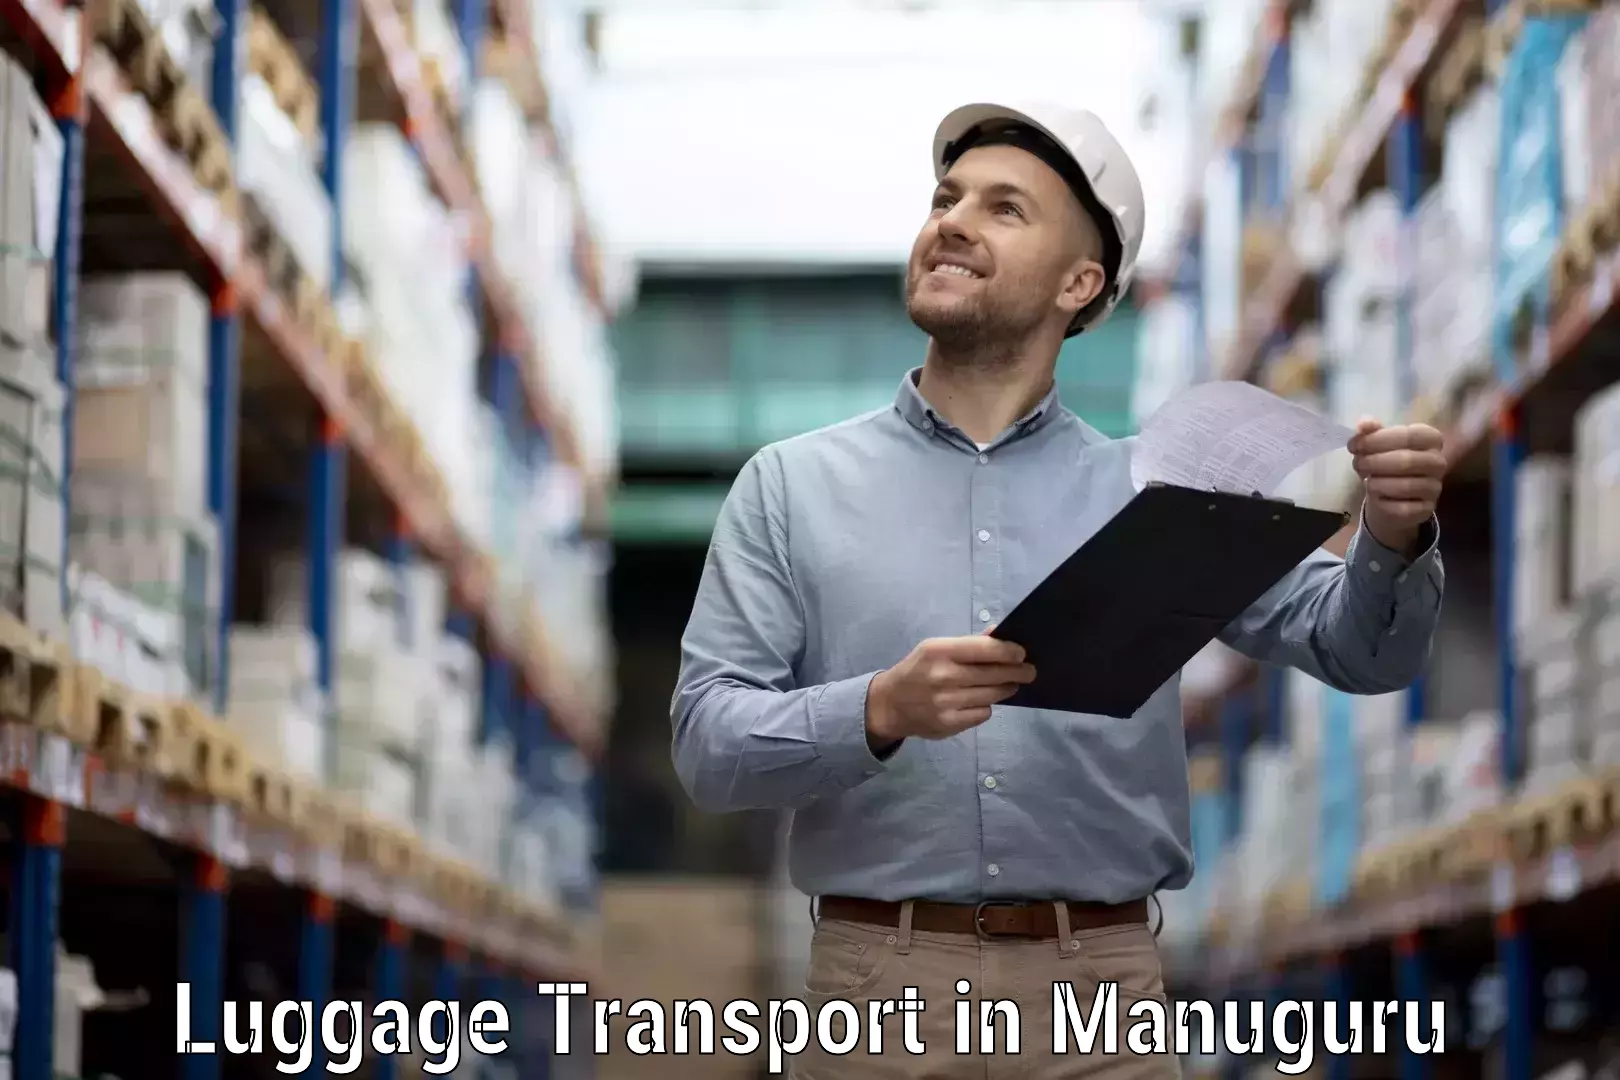 Luggage transport company in Manuguru